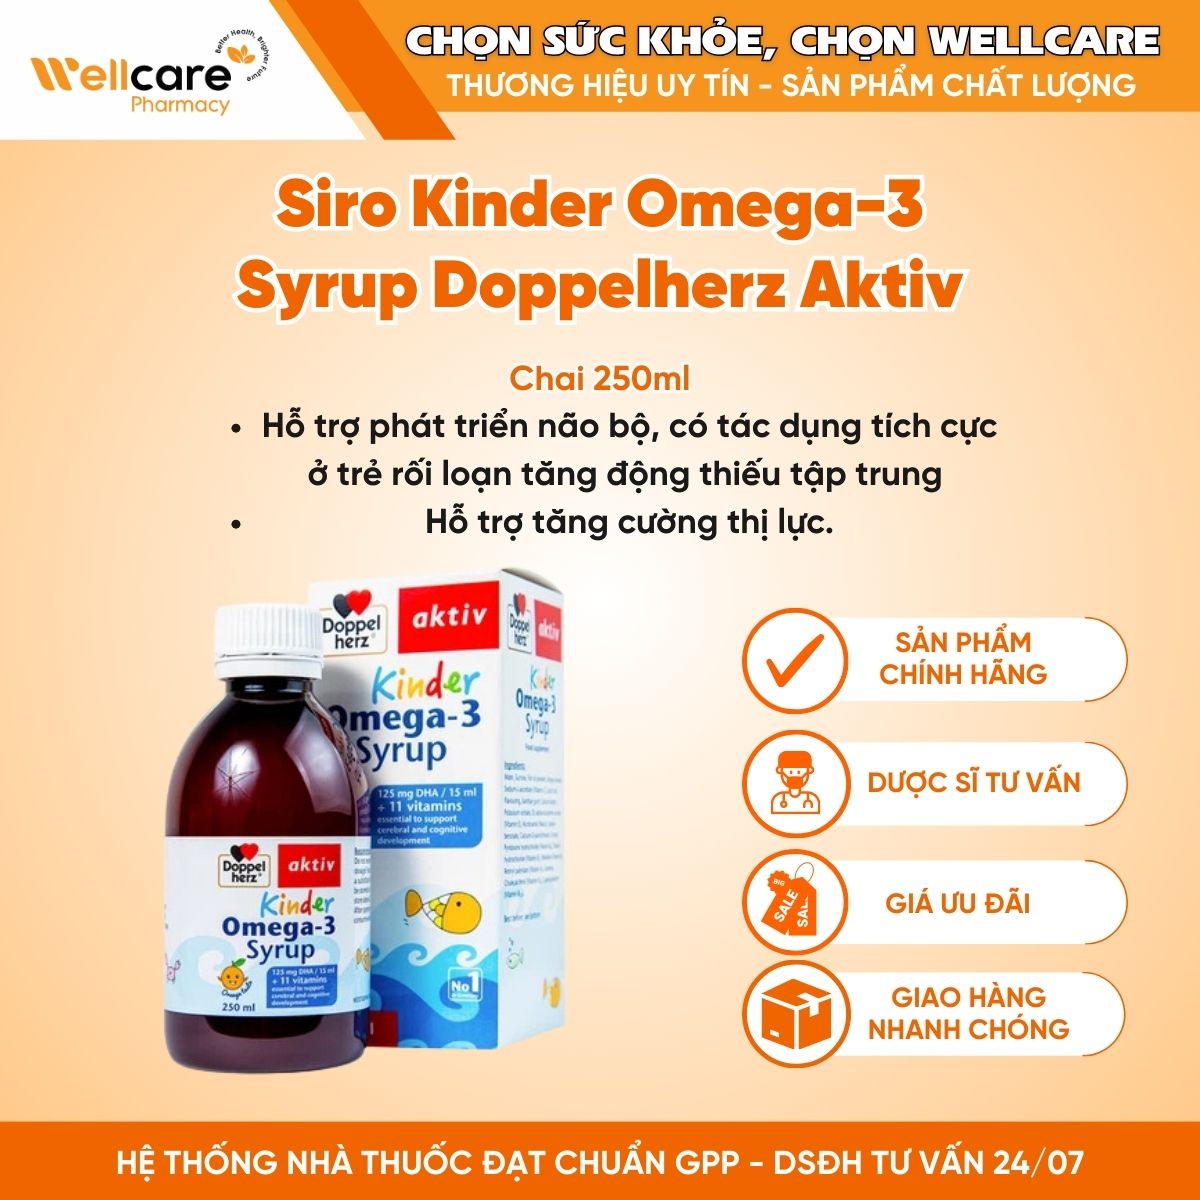 Siro Kinder Omega-3 Syrup Doppelherz Aktiv – Hỗ trợ phát triển não bộ (Chai 250ml)